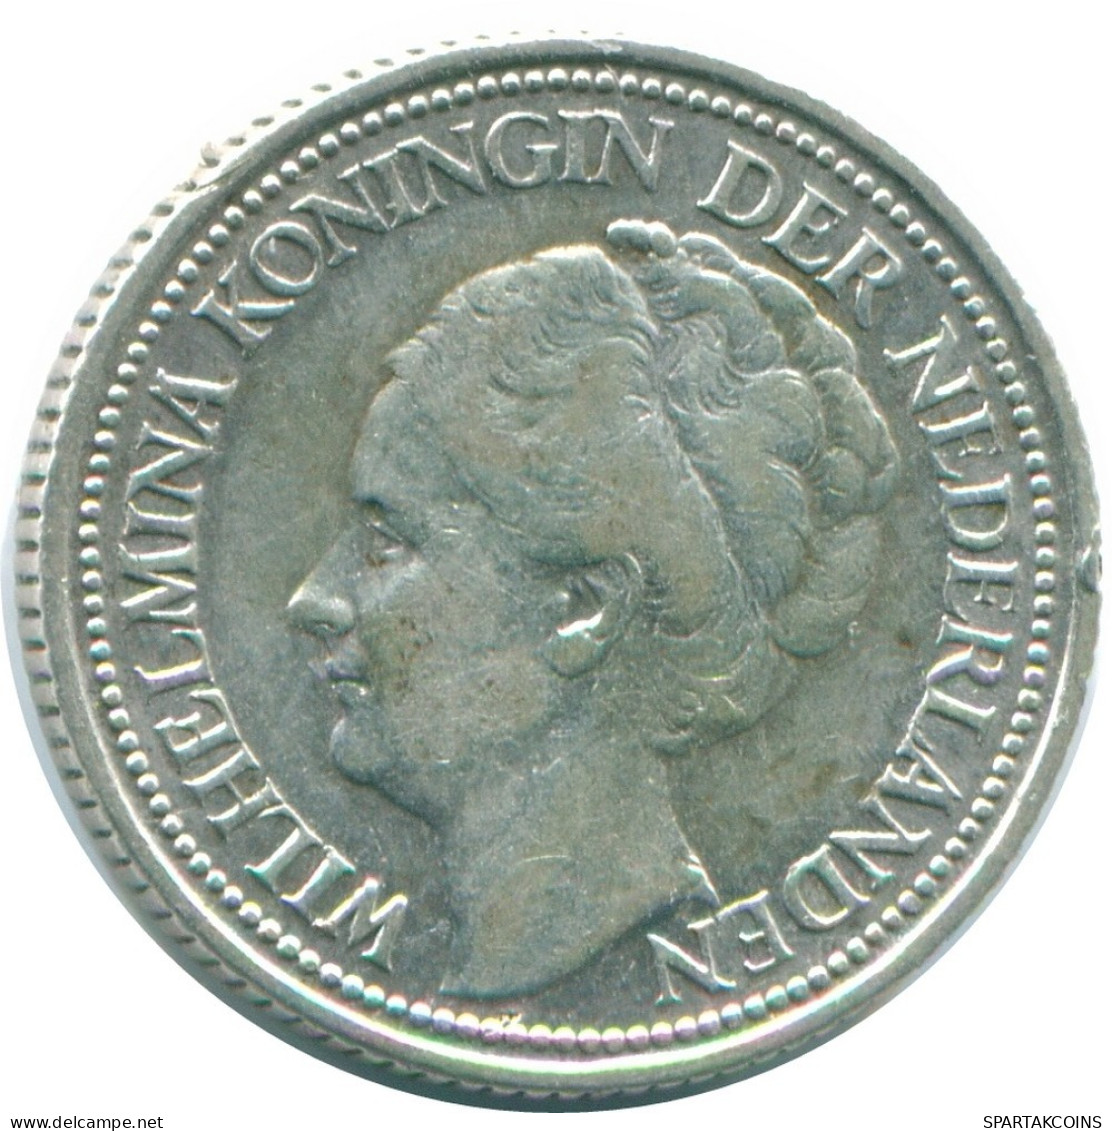 1/4 GULDEN 1947 CURACAO Netherlands SILVER Colonial Coin #NL10766.4.U.A - Curacao